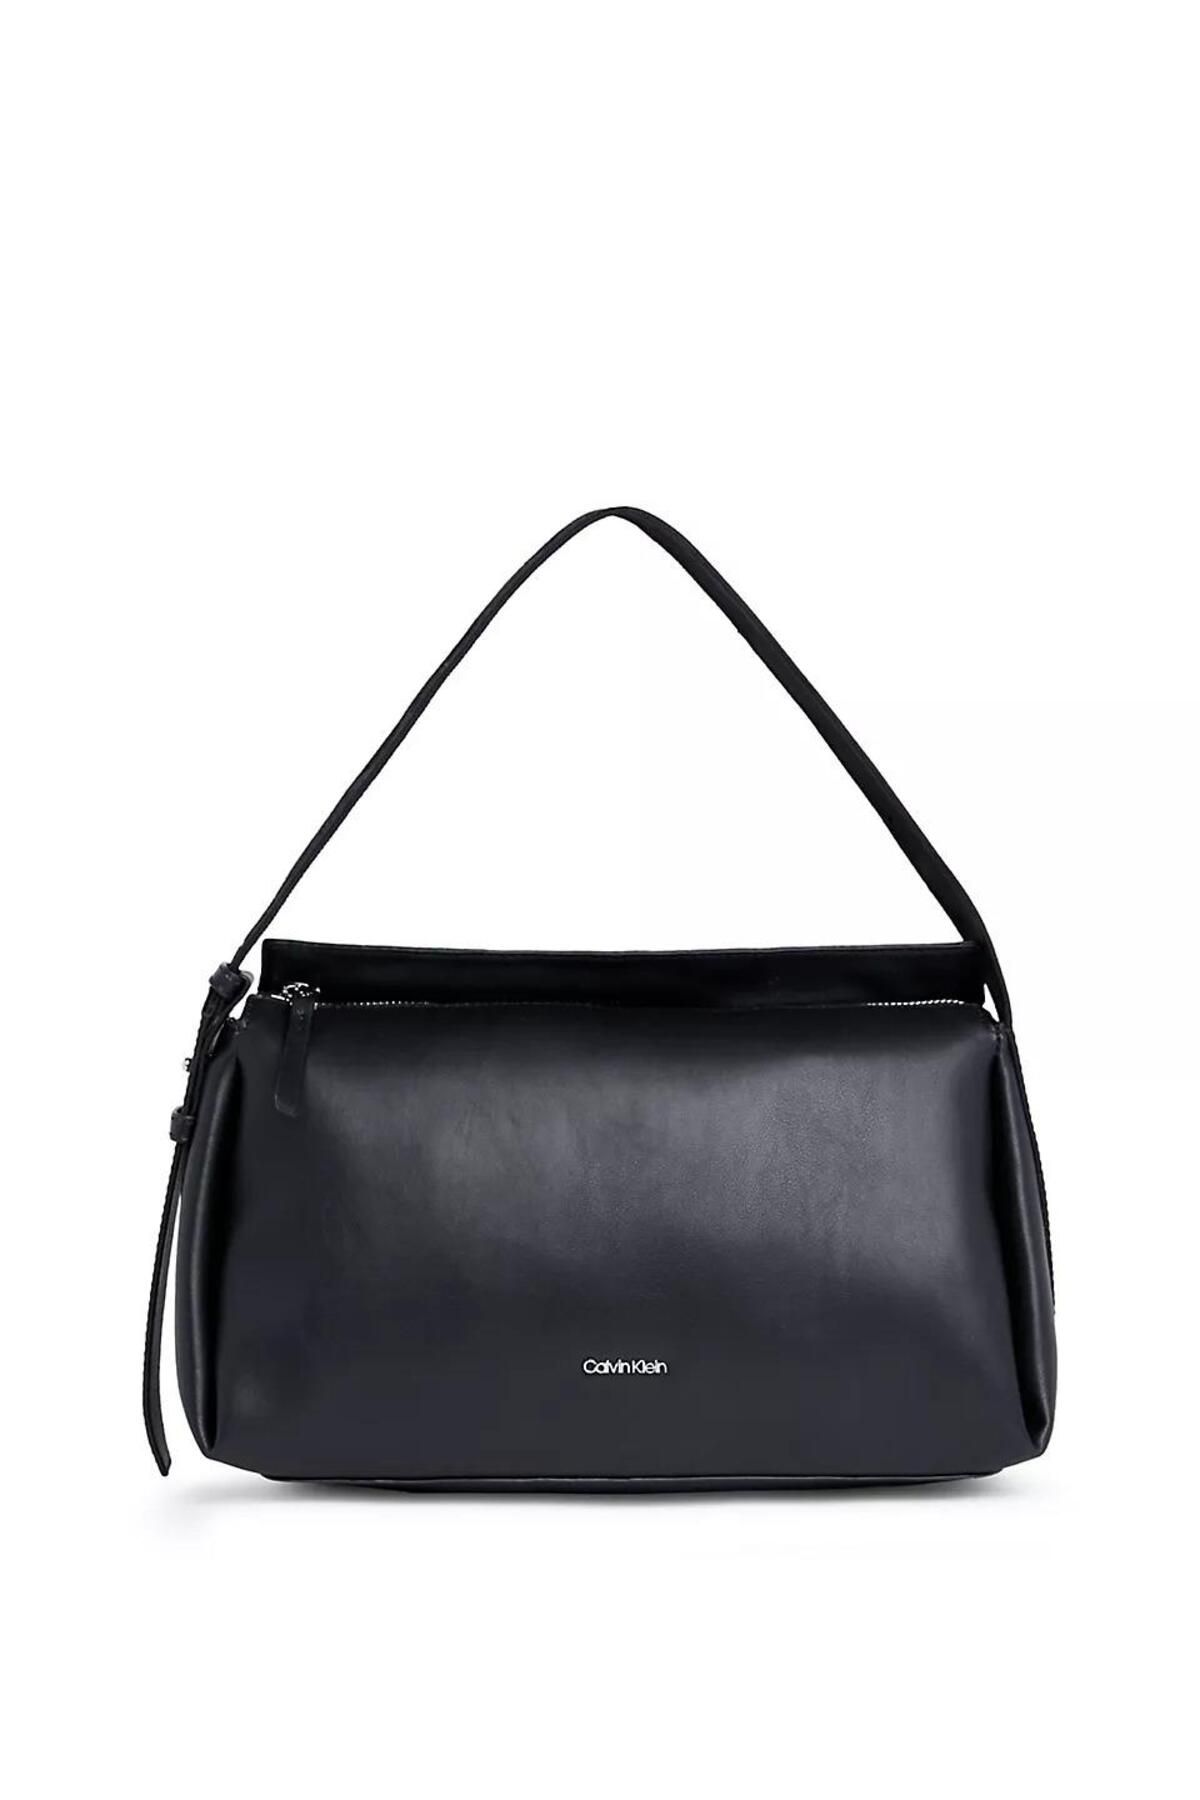 Calvin Klein GRACIE SHOULDER BAG